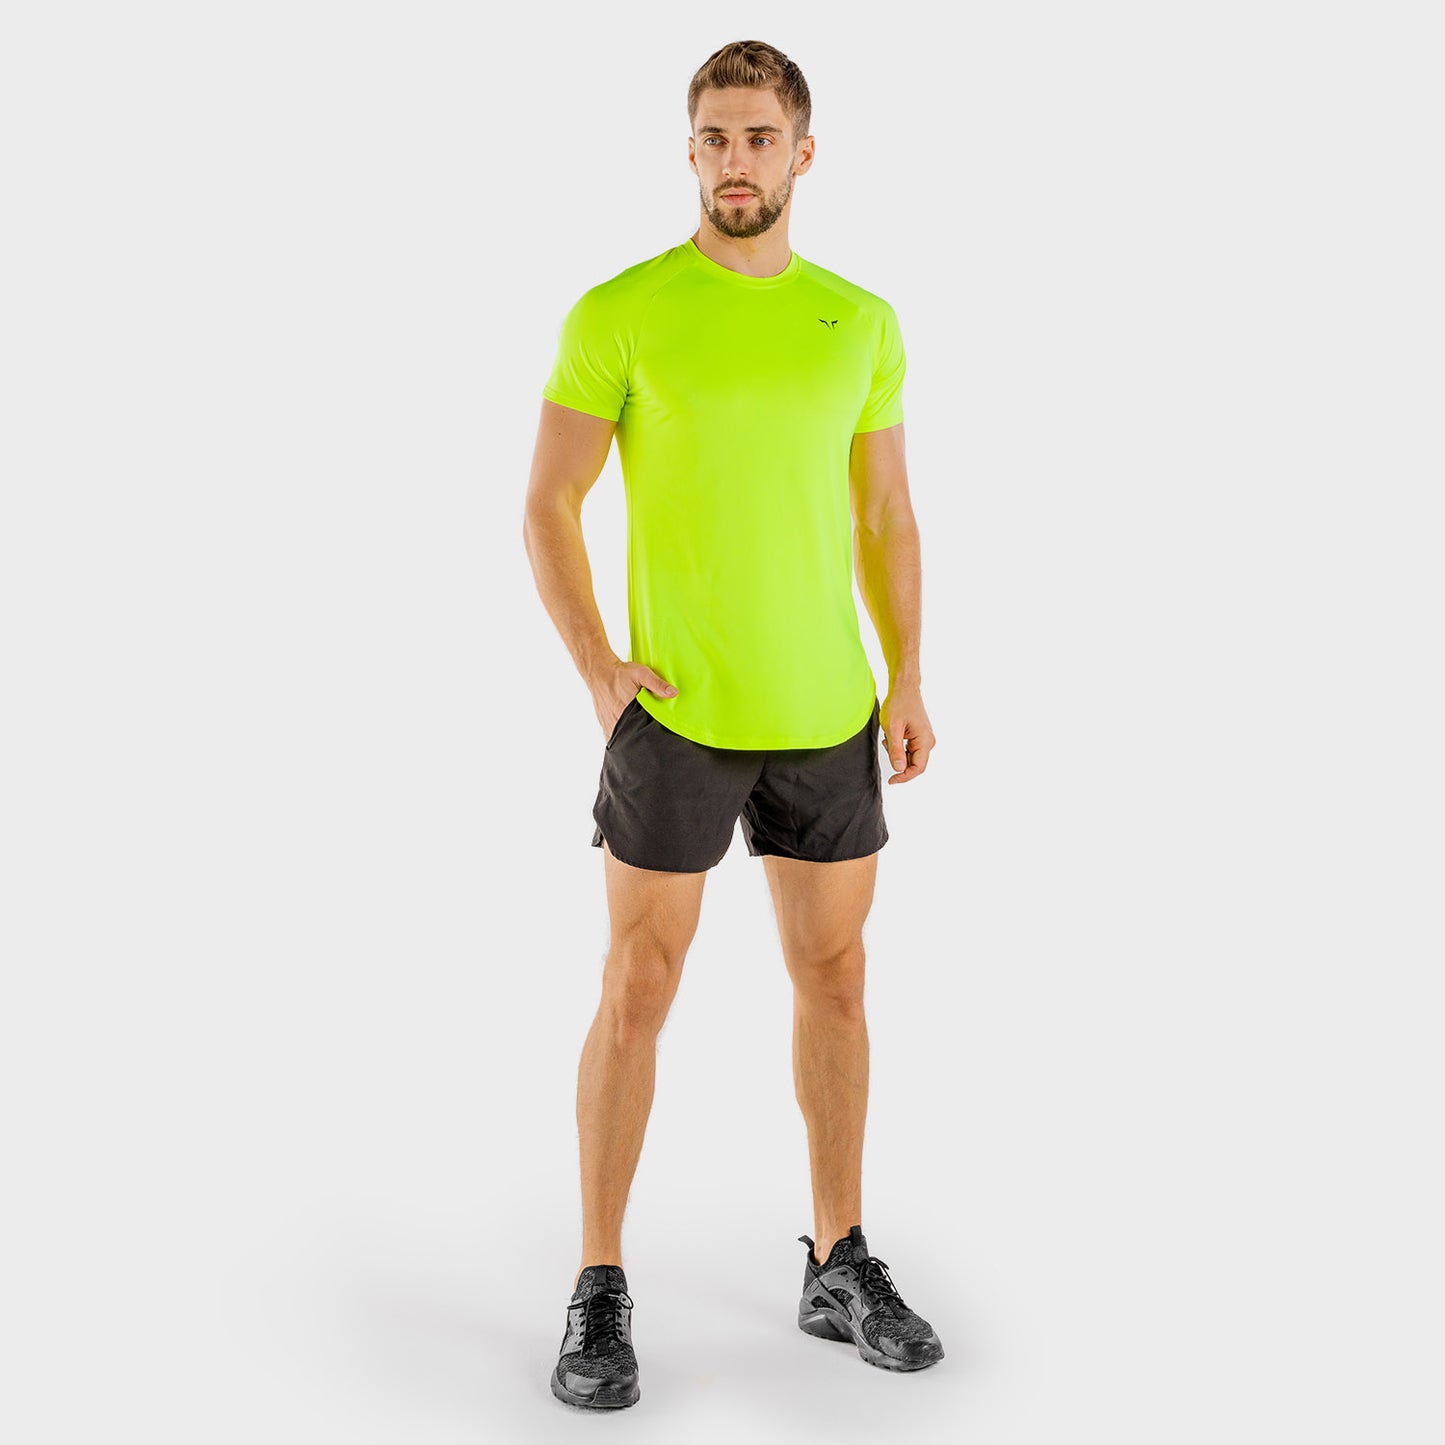 squatwolf-gym-wear-limitless-razor-tee-neon-workout-shirts-for-men